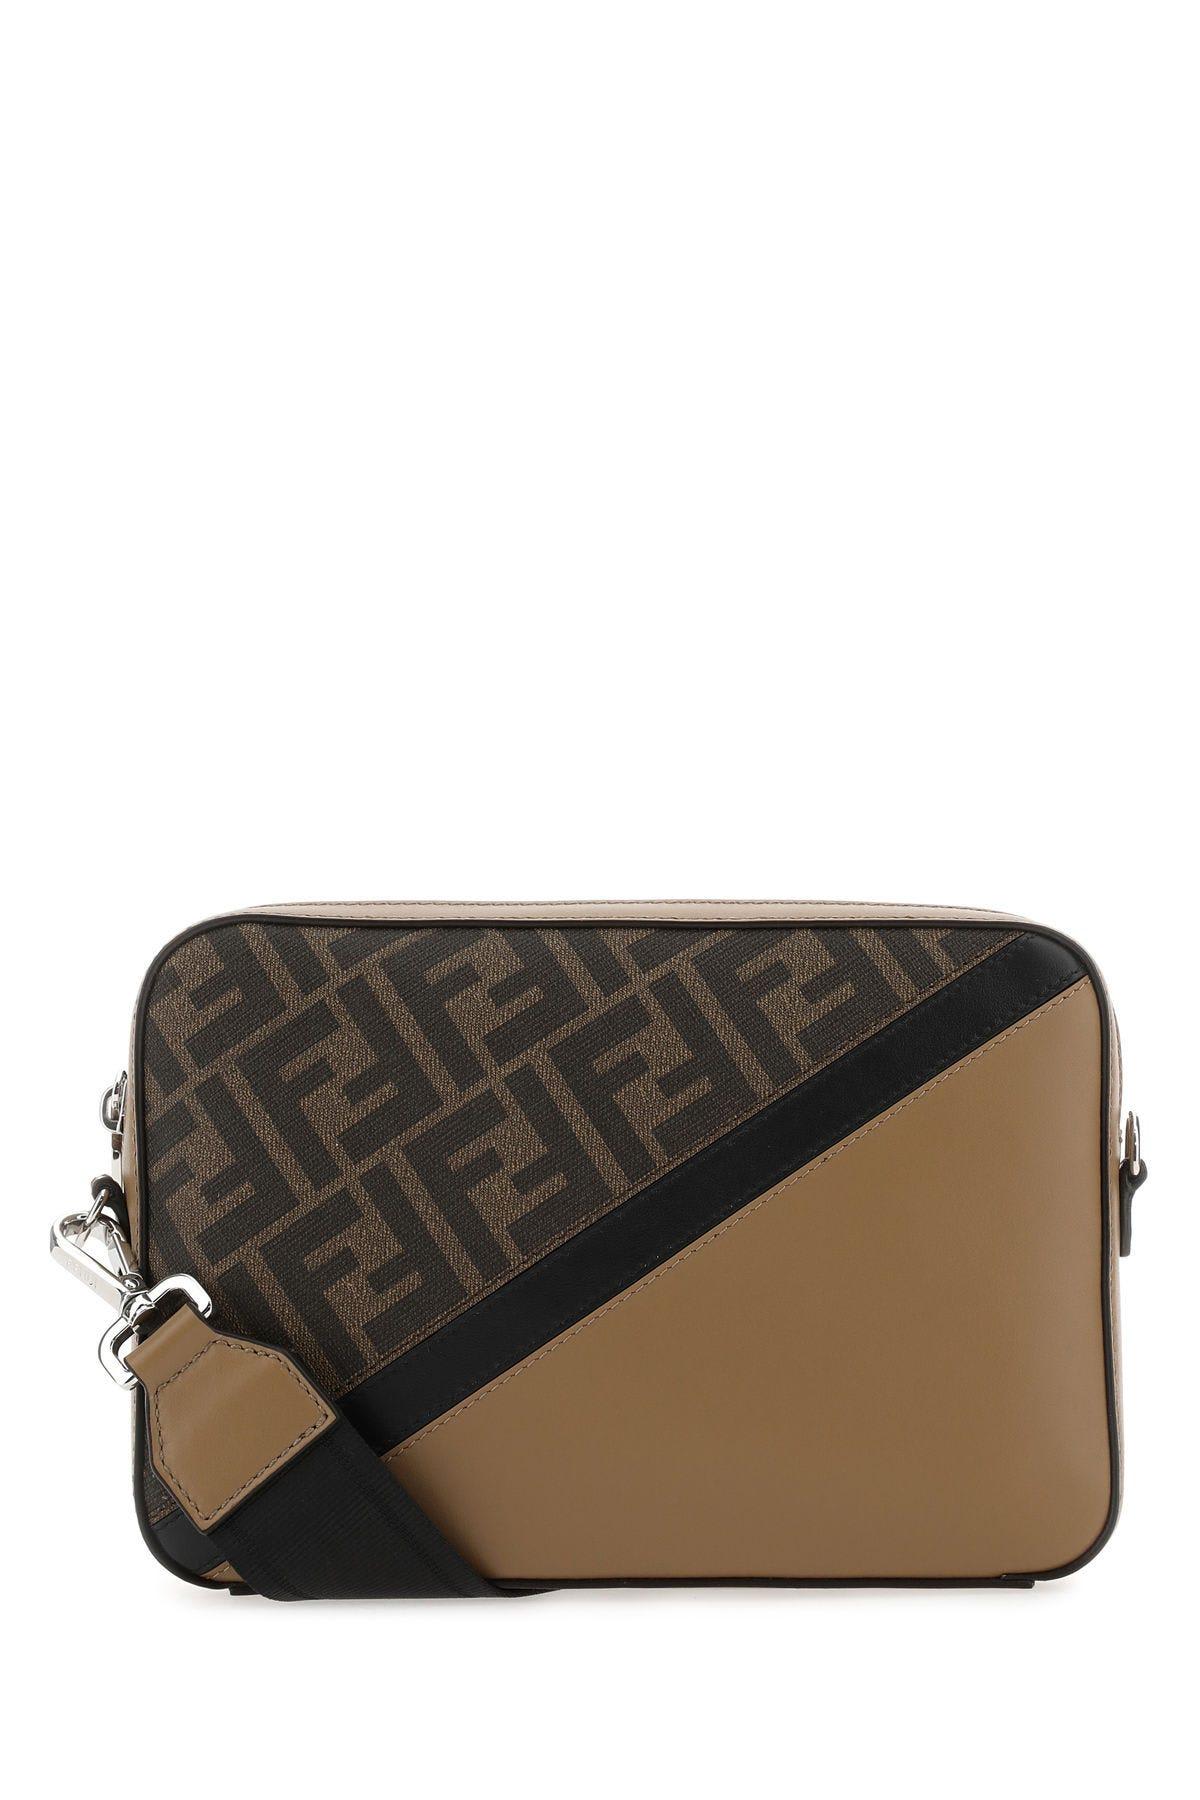 Fendi Multicolor Fabric And Leather Medium Camera Case Crossbody Bag